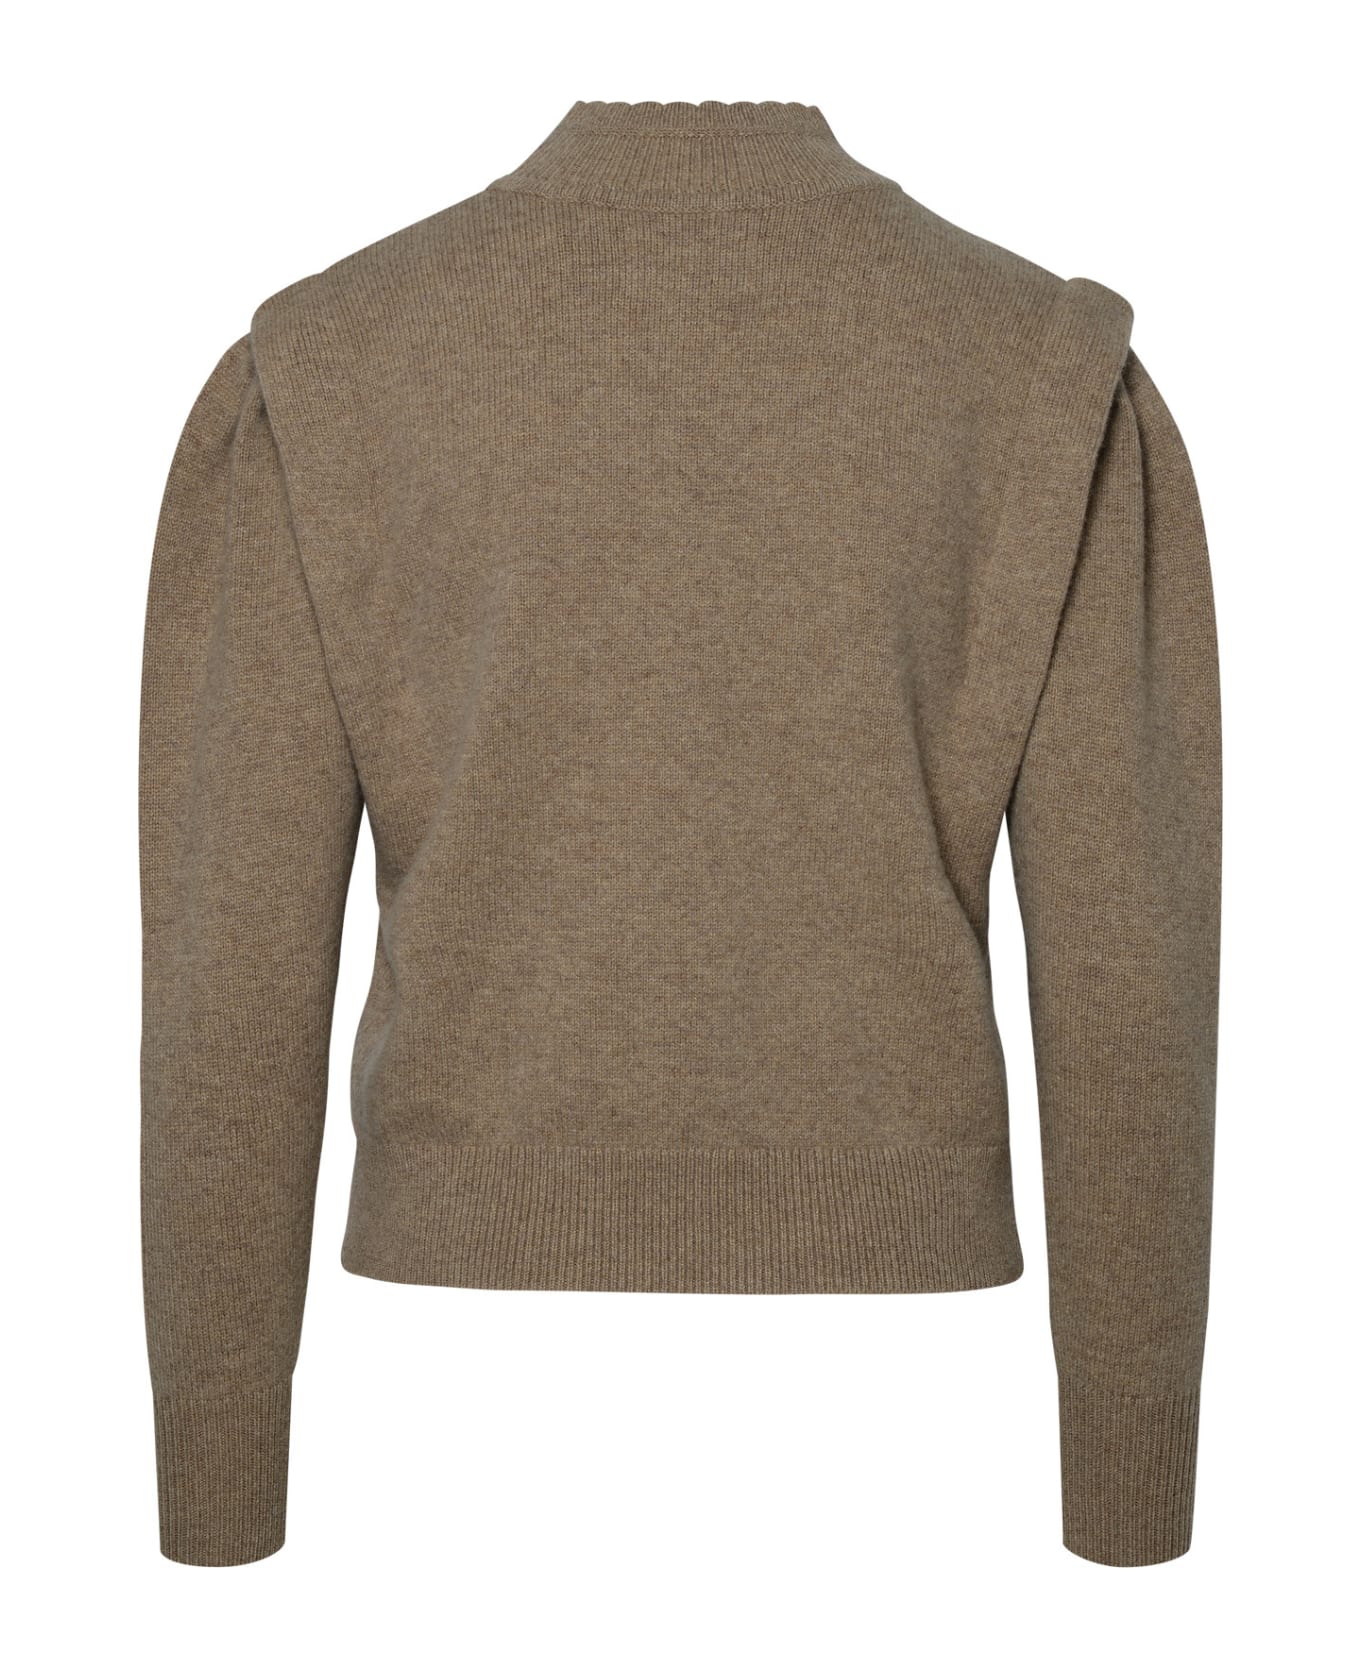 Marant Étoile 'lucile' Beige Wool Turtleneck Sweater - Beige